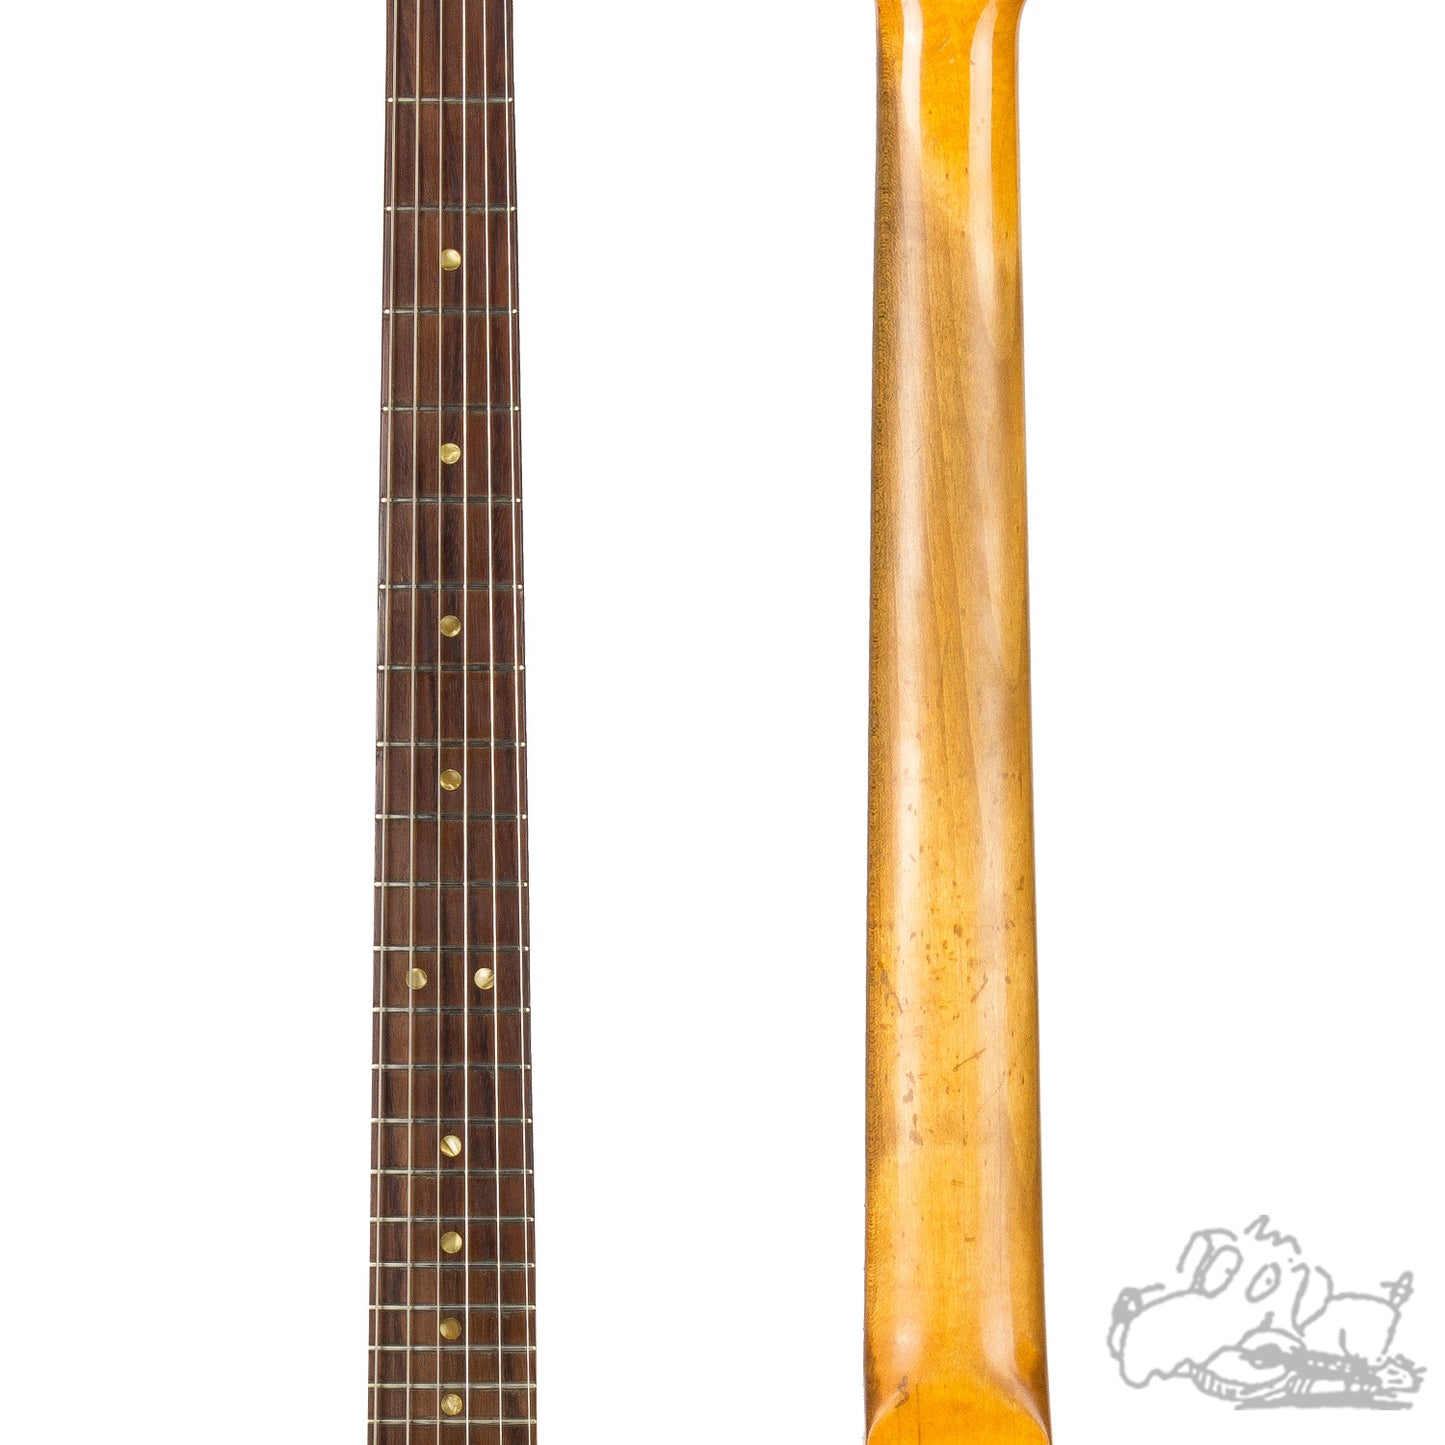 1966 Fender Stratocaster (Blonde)